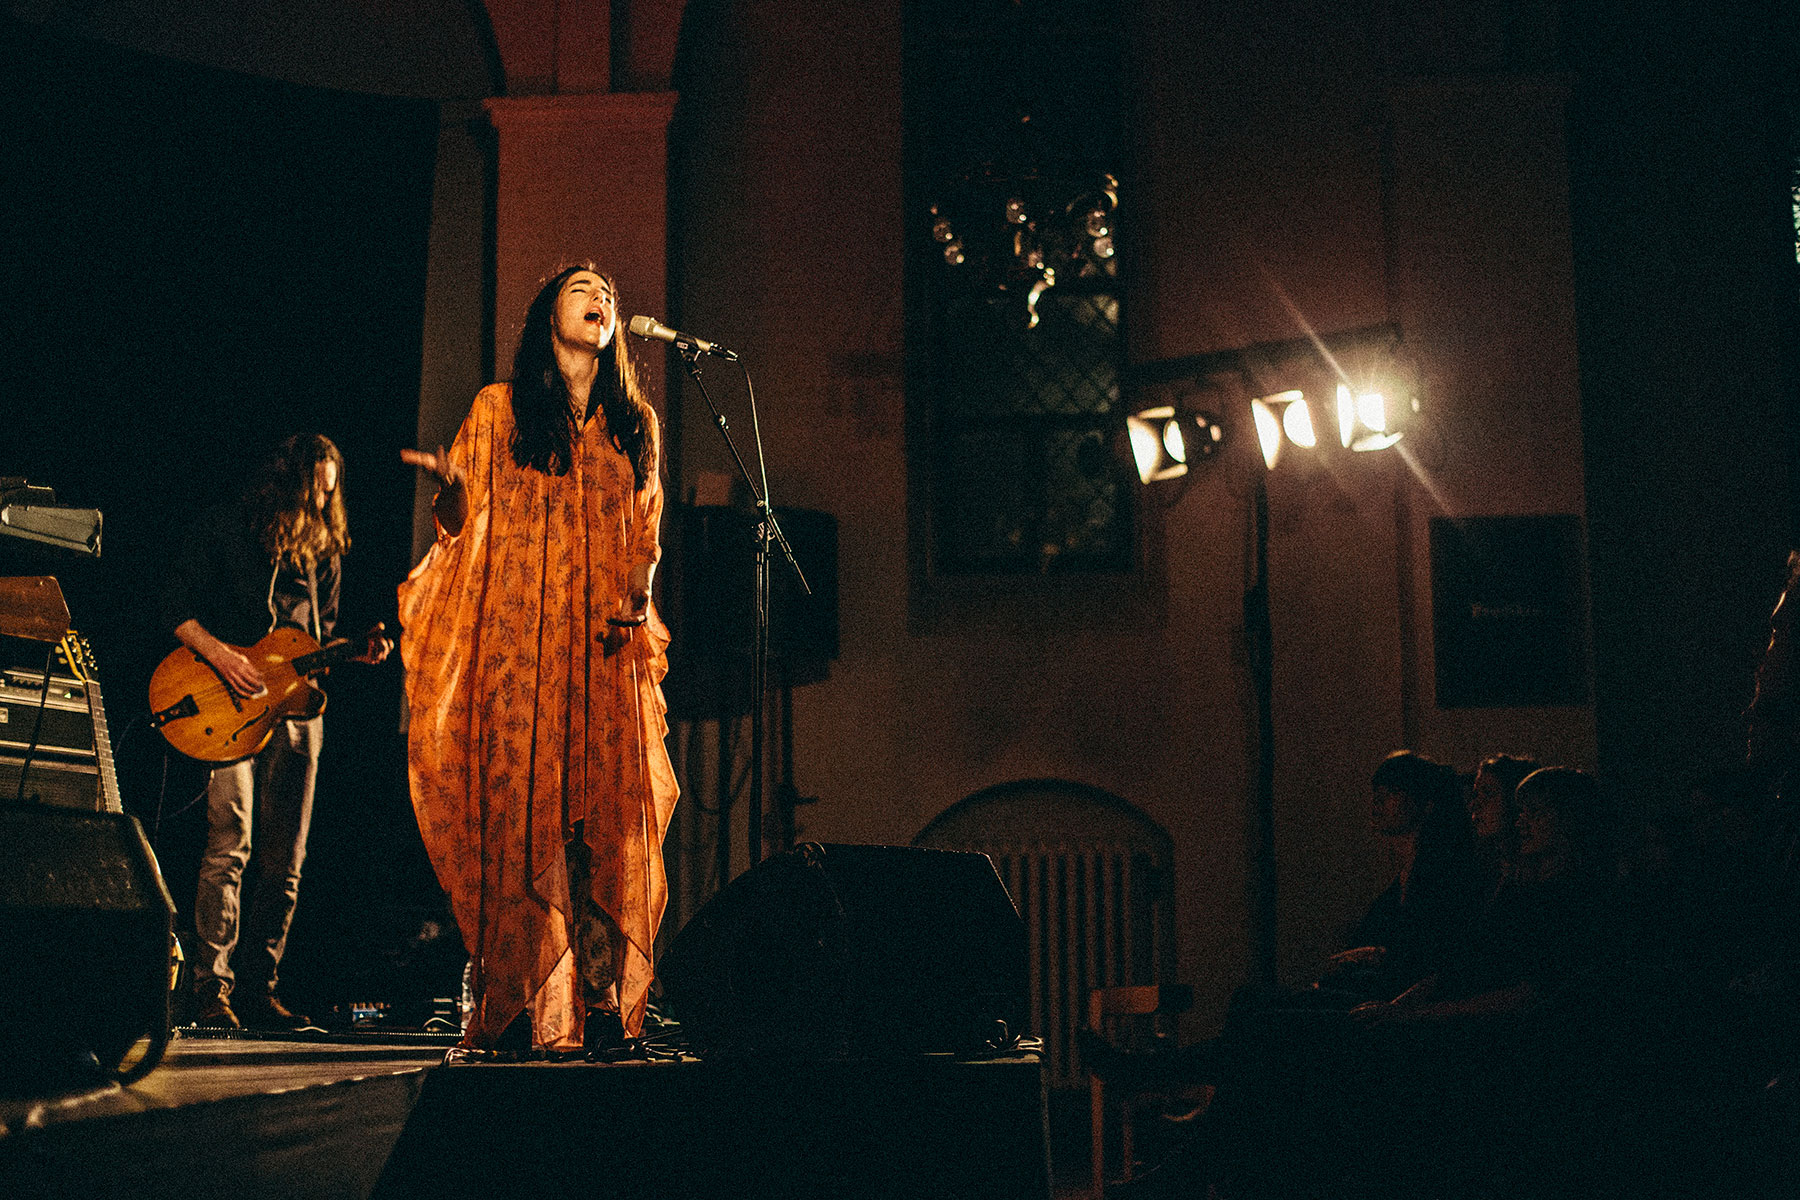 Picture from FROST festival 2013. Mariam the Believer and Cancer gave a concert in Koncertkirken at Blågårdsplads